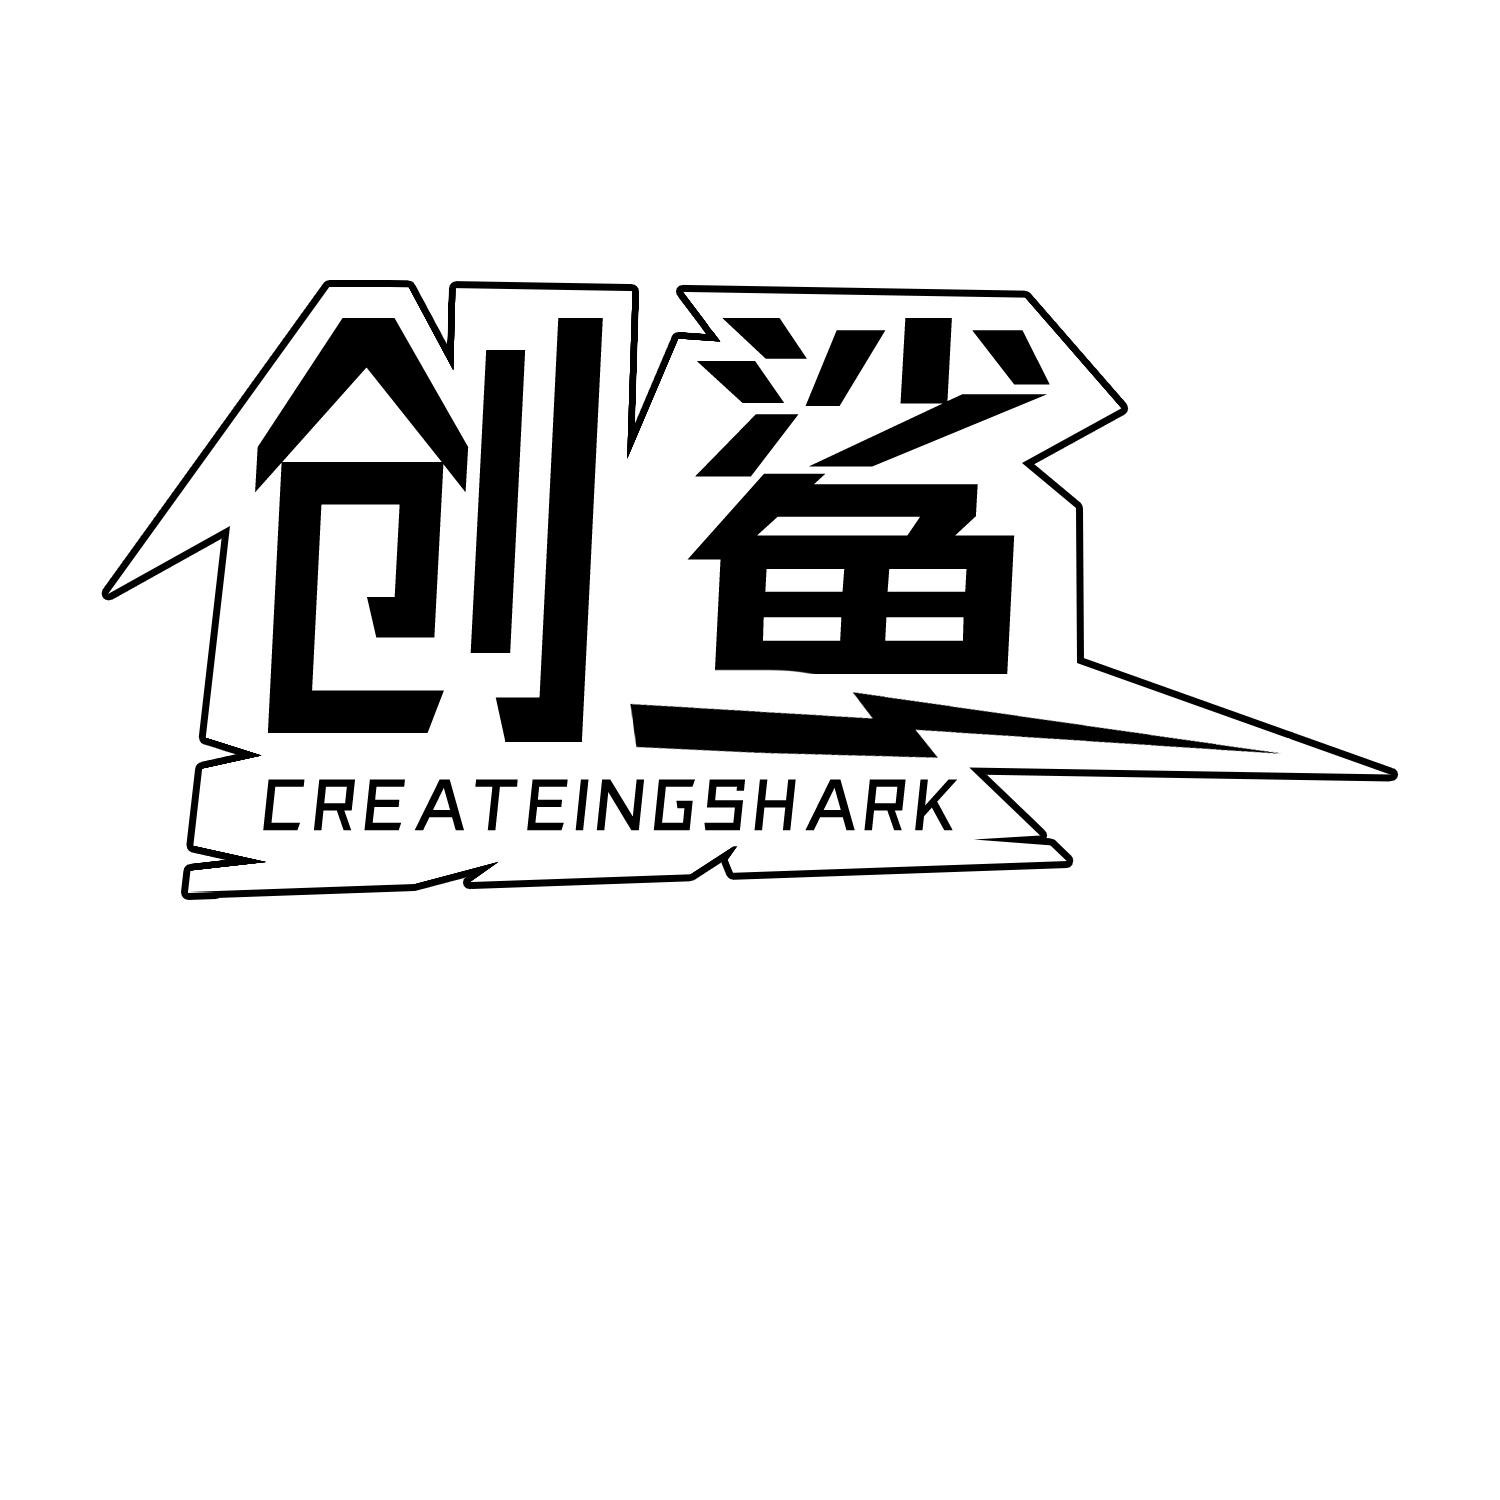 35类-广告销售创鲨 CREATEINGSHARK商标转让